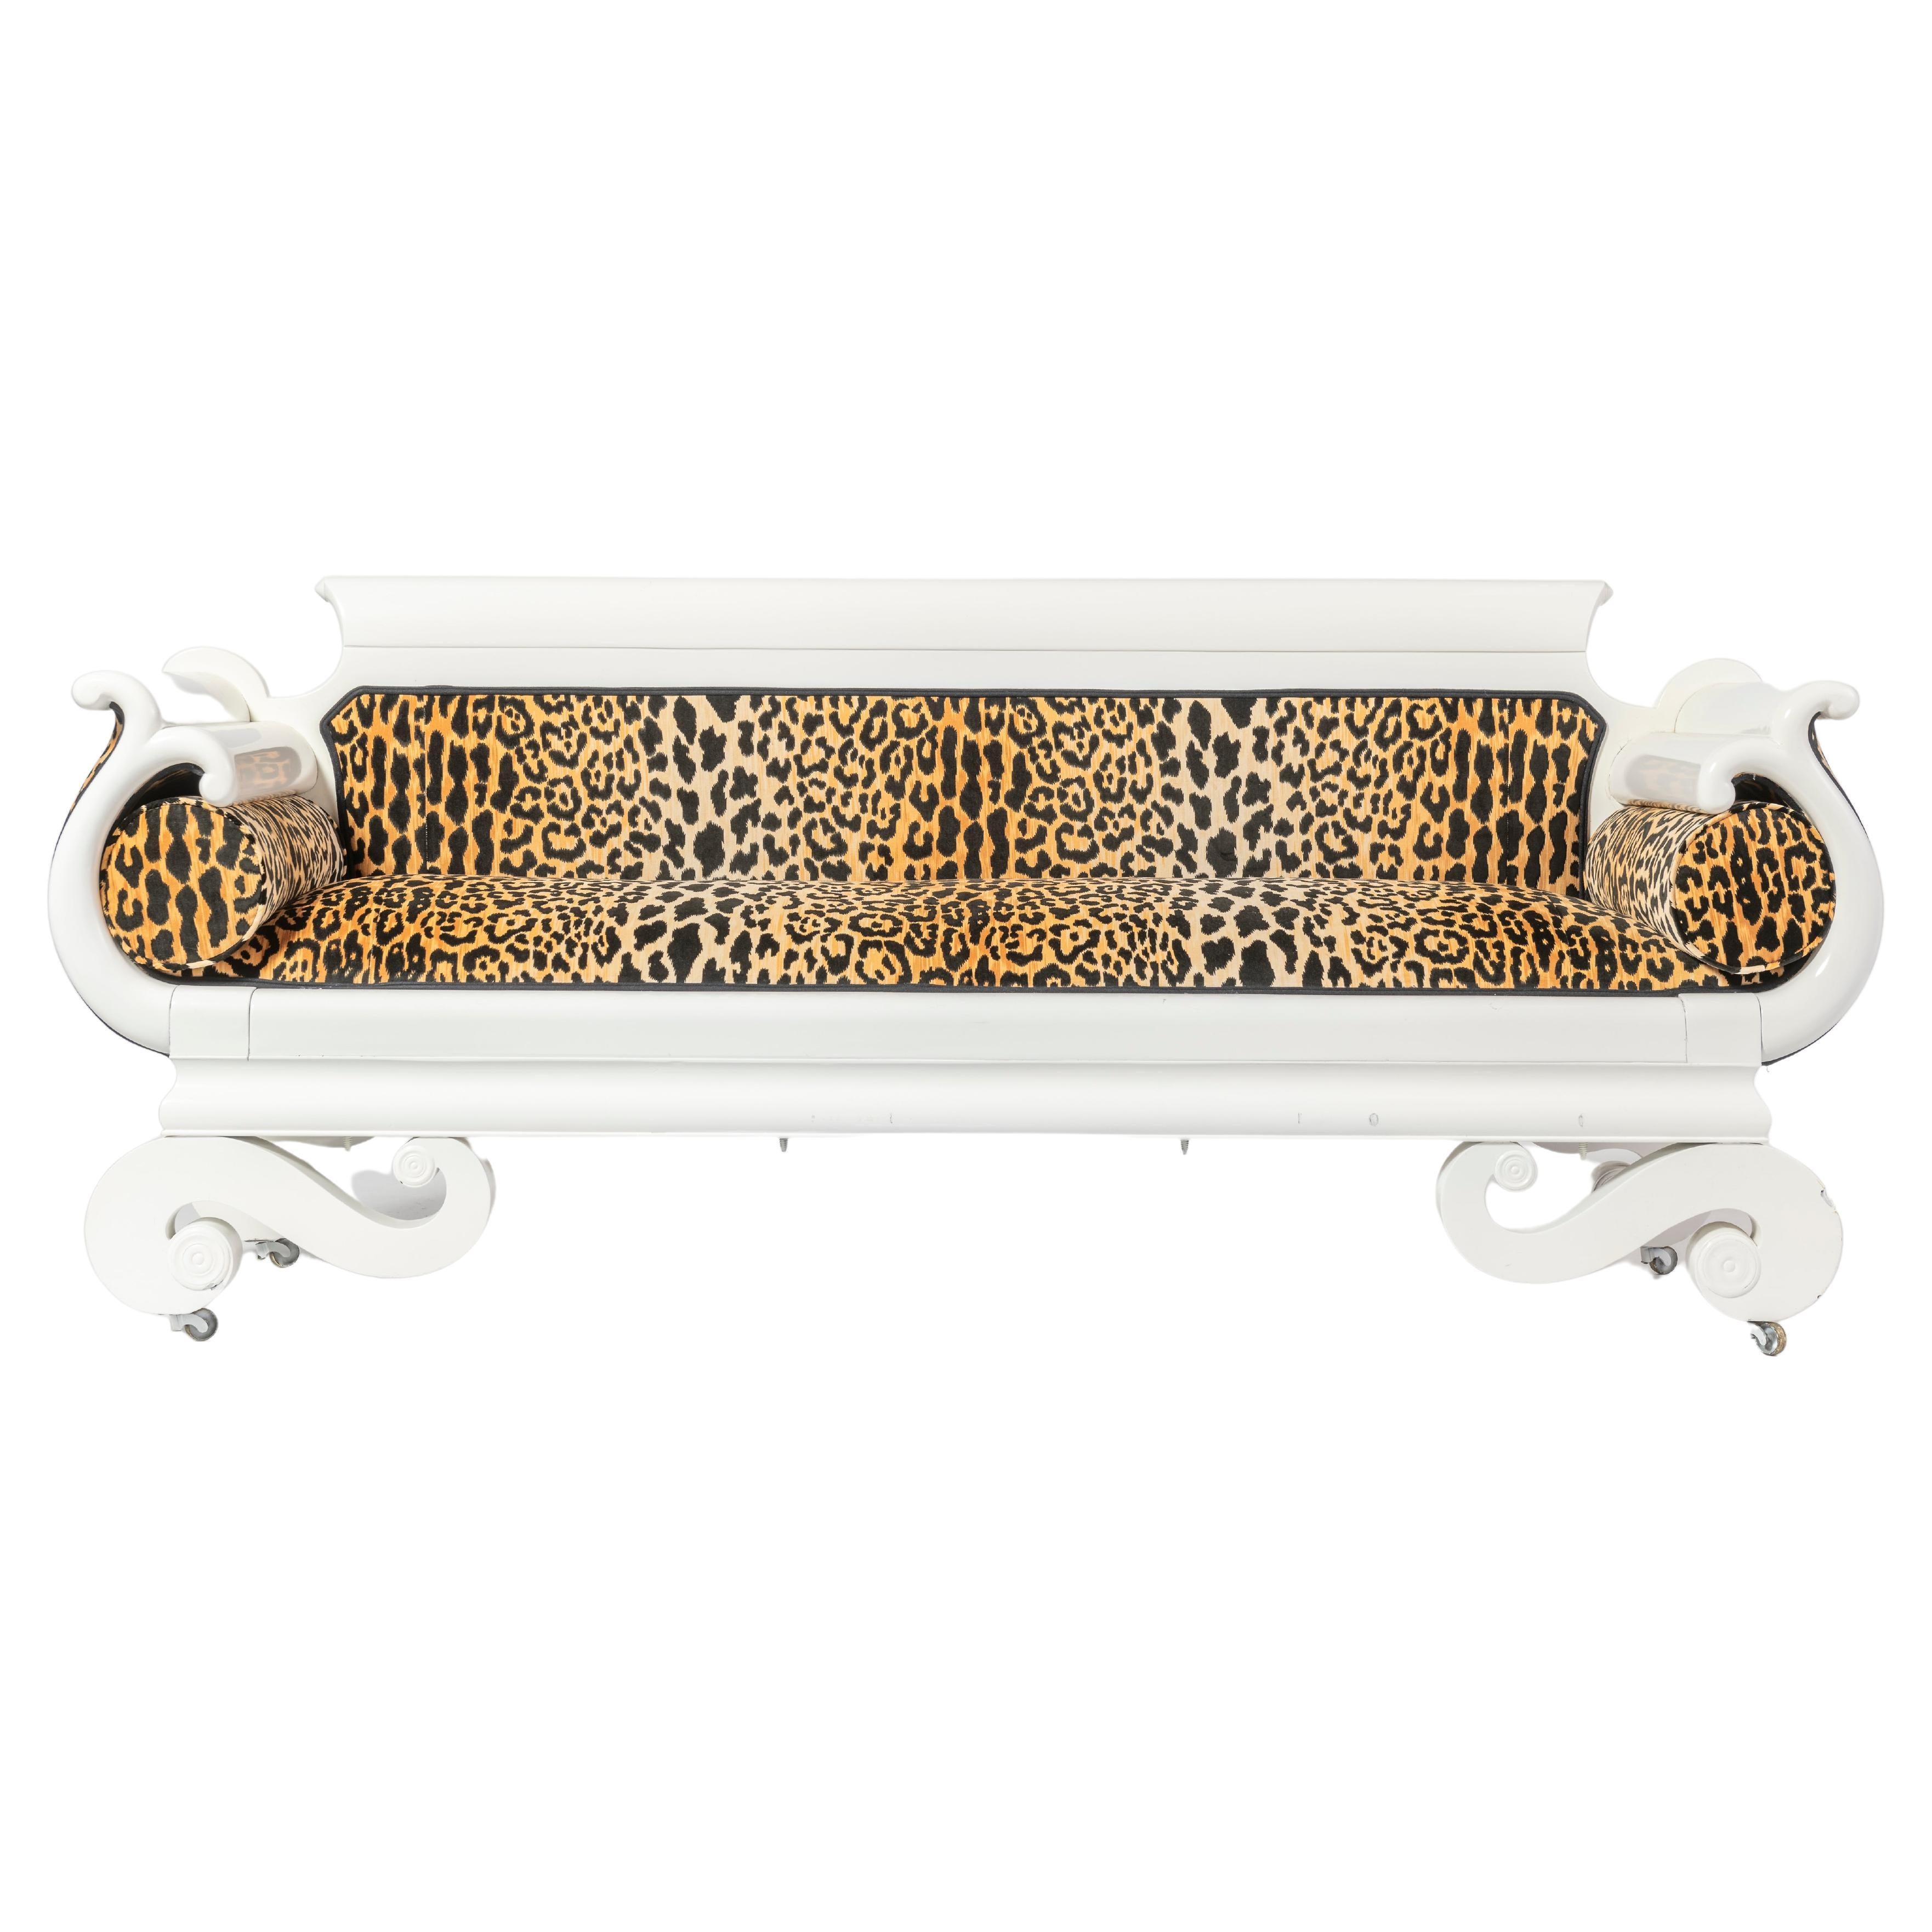 Canapé laqué de style Empire avec tissu léopard